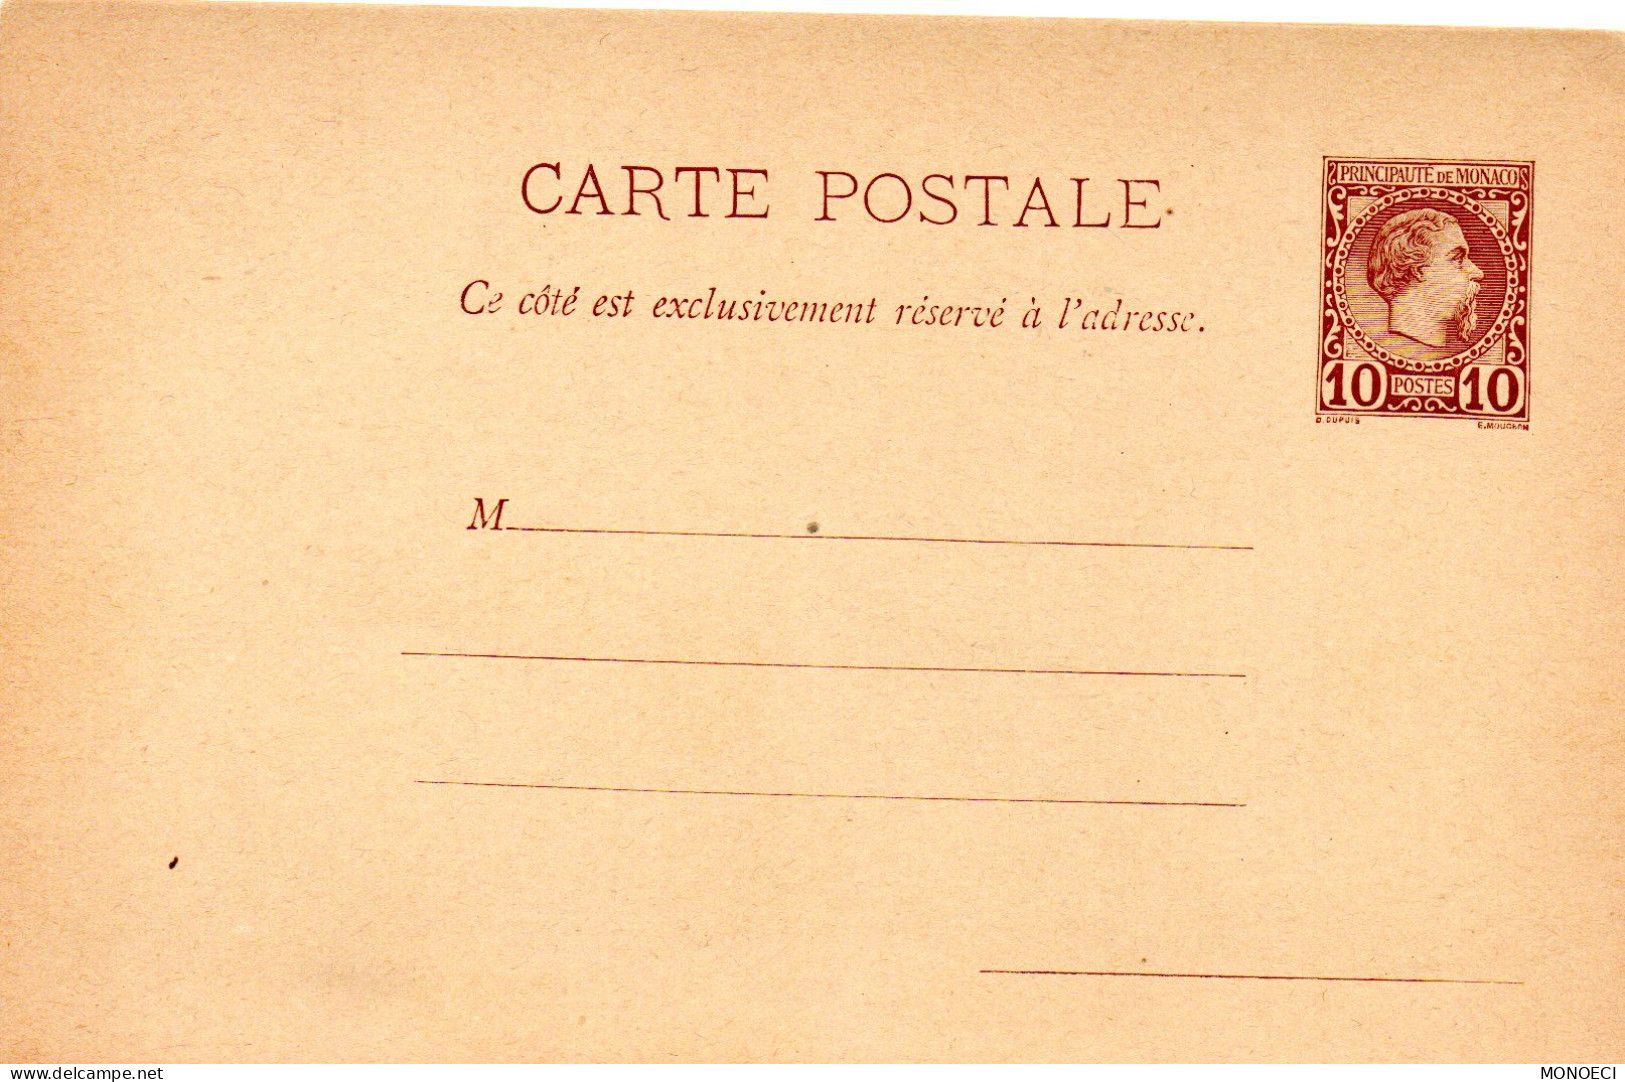 MONACO -- MONTE CARLO -- Entier Postal -- Carte Postale -- 10 C. Brun Sur Jaune Paille Prince Charles III - Postal Stationery